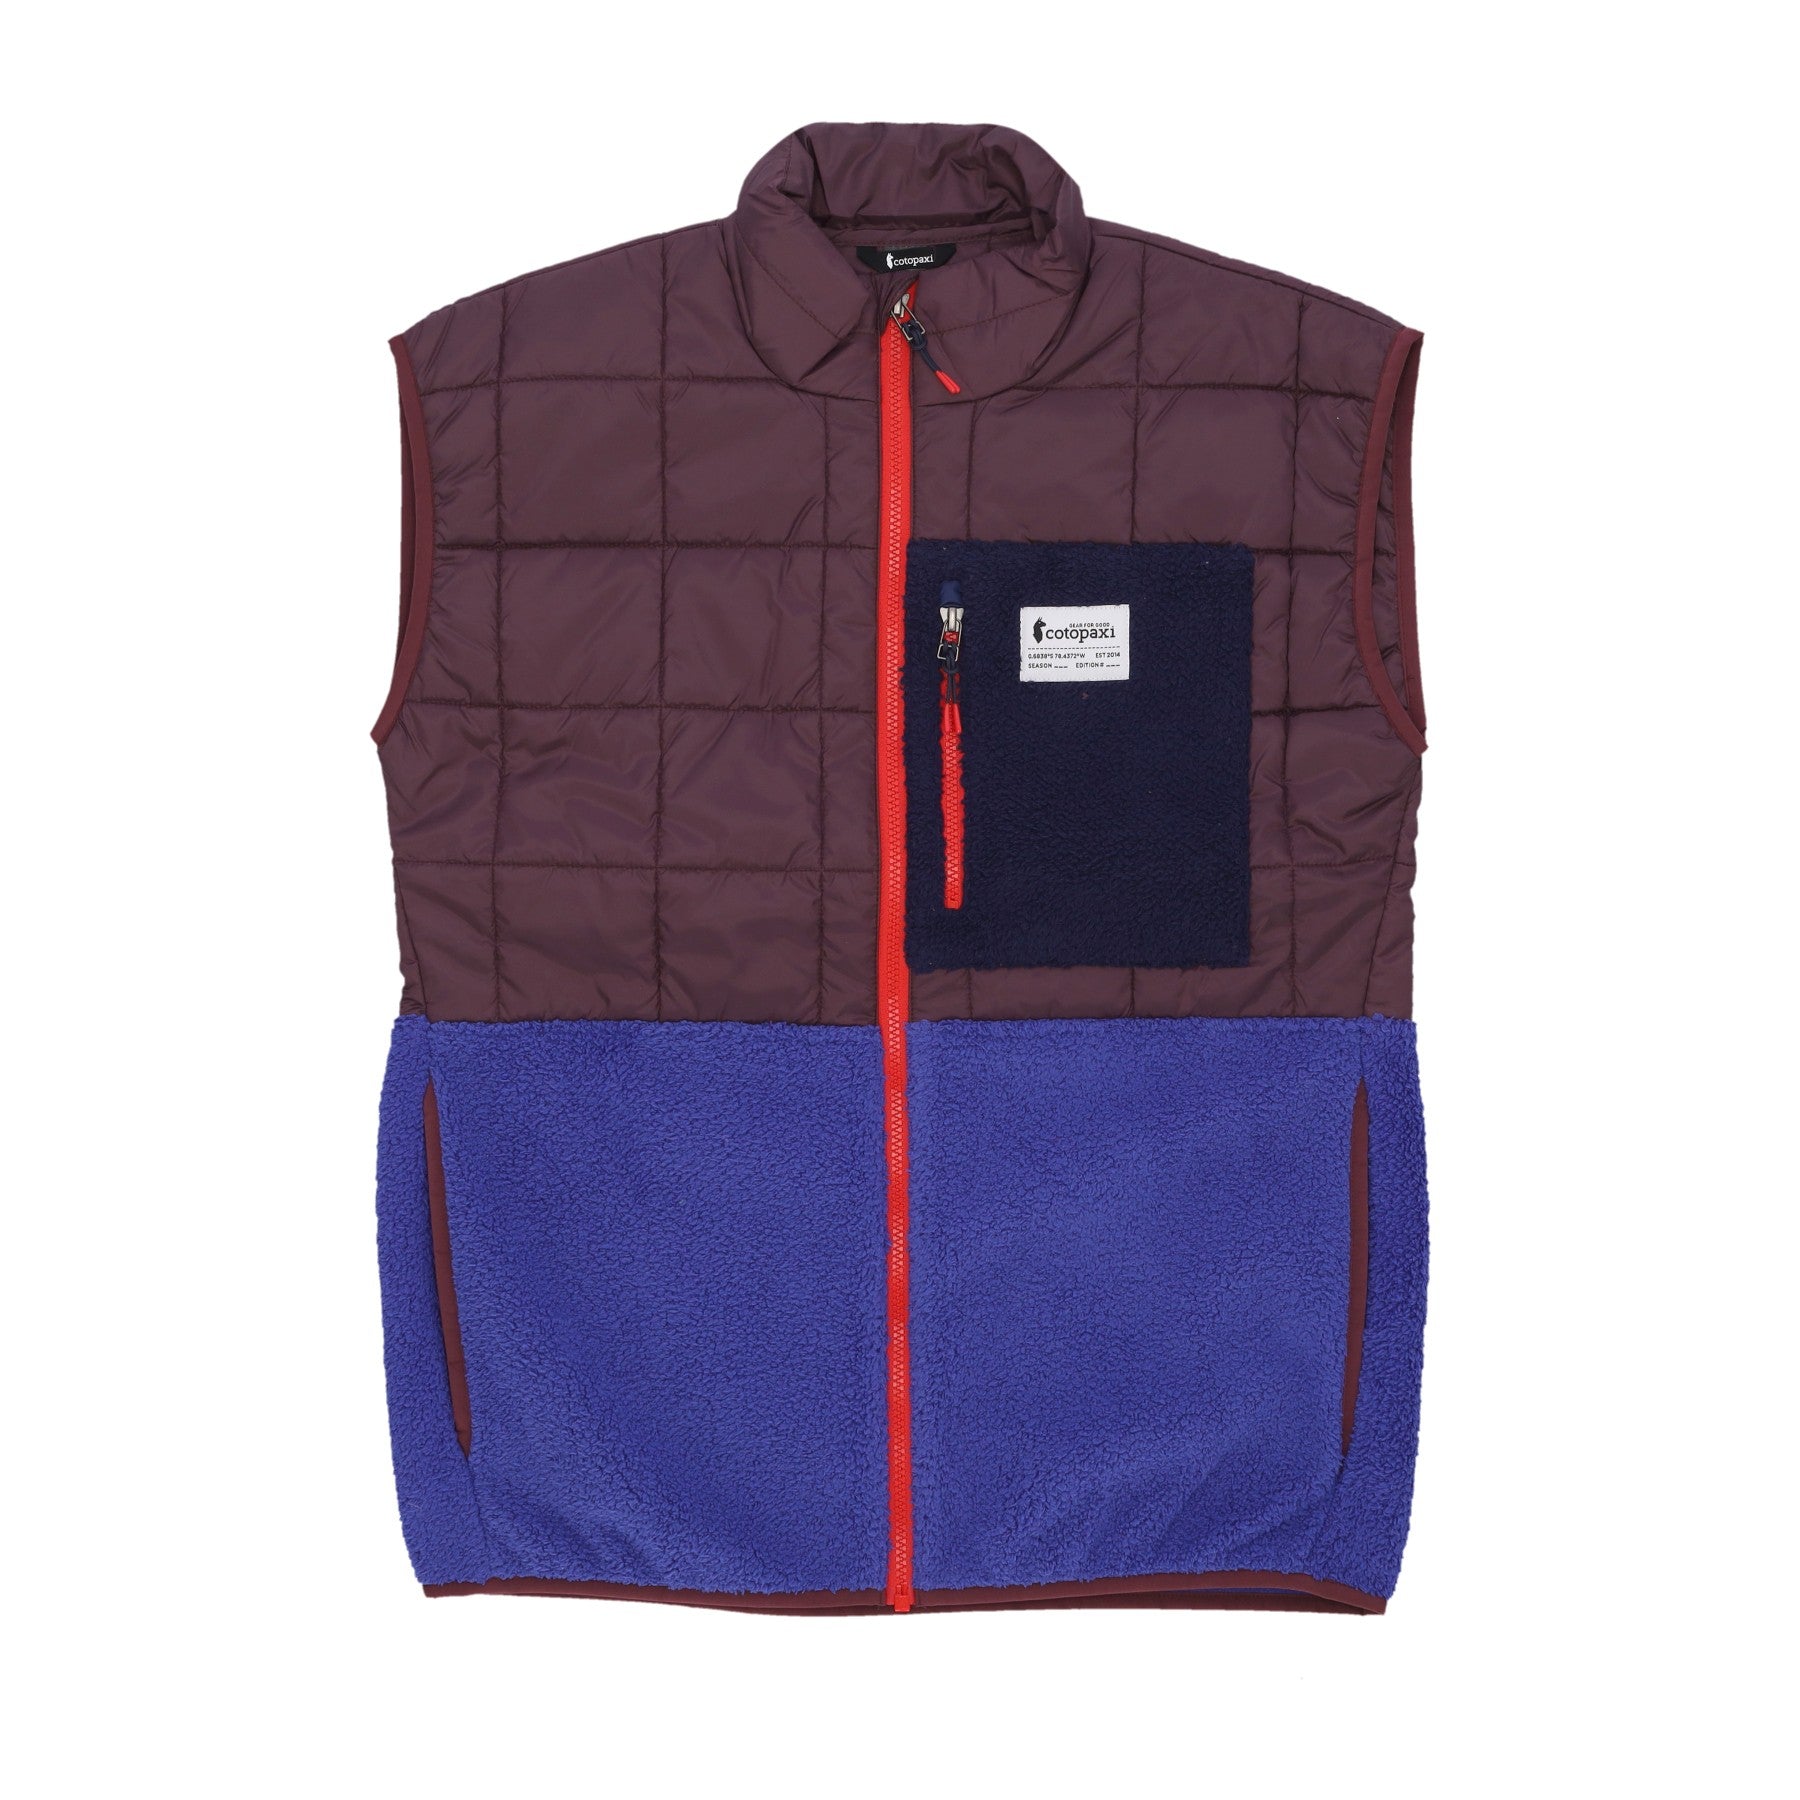 Cotopaxi, Smanicato Uomo Trico Hybrid Vest, Wine/blue Violet